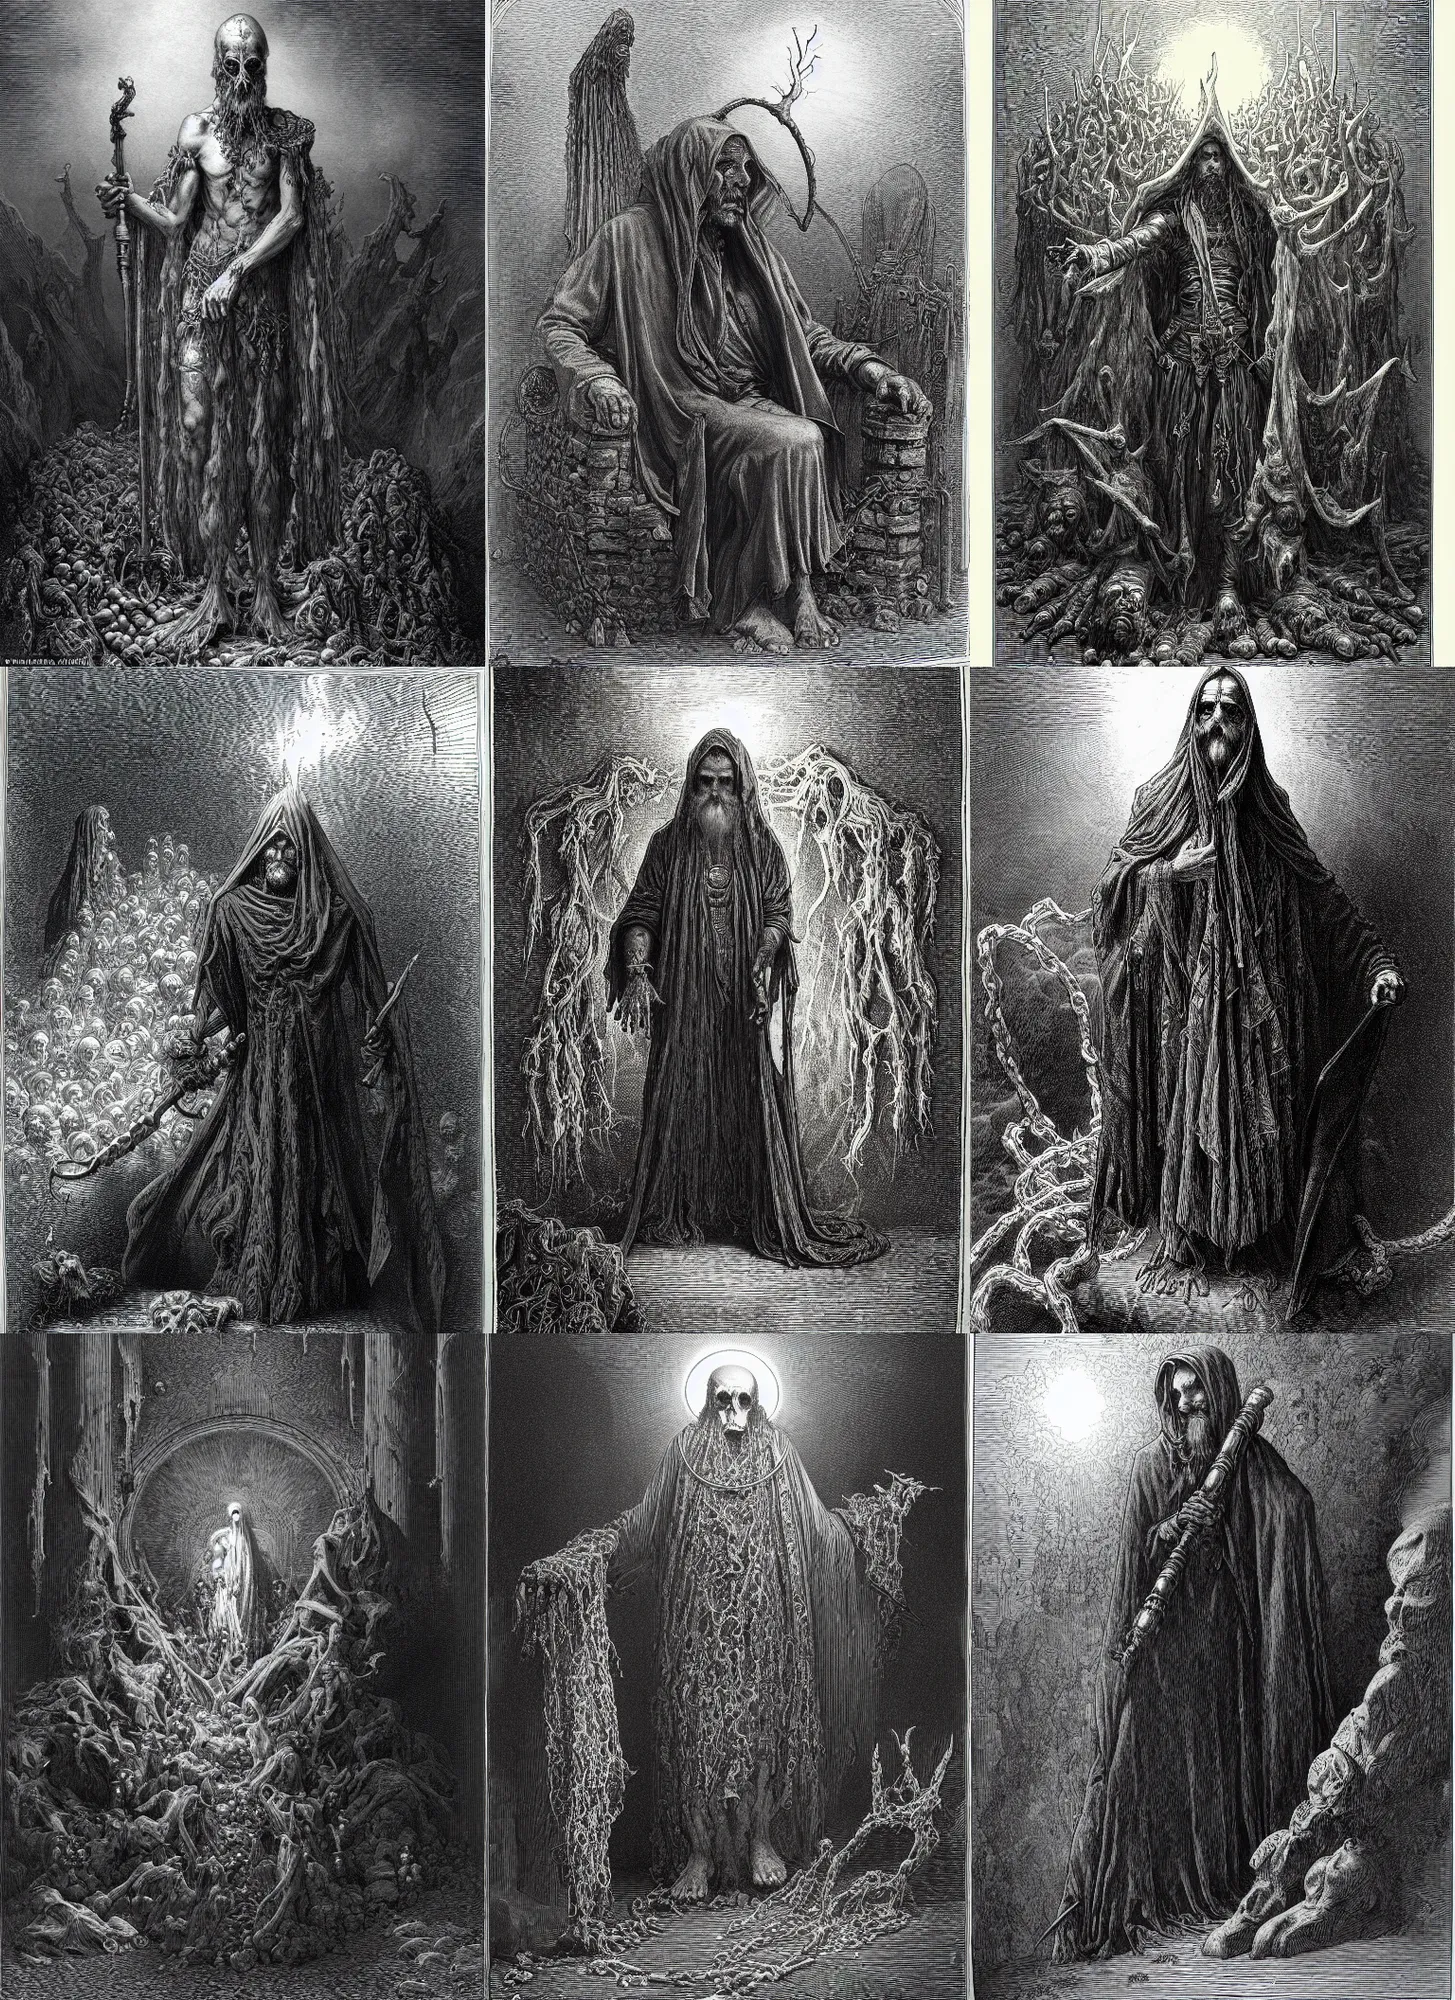 Prompt: portrait of the necromancer, illustrated by gustave dore, hyper detailed, fantasy surrealism, crisp